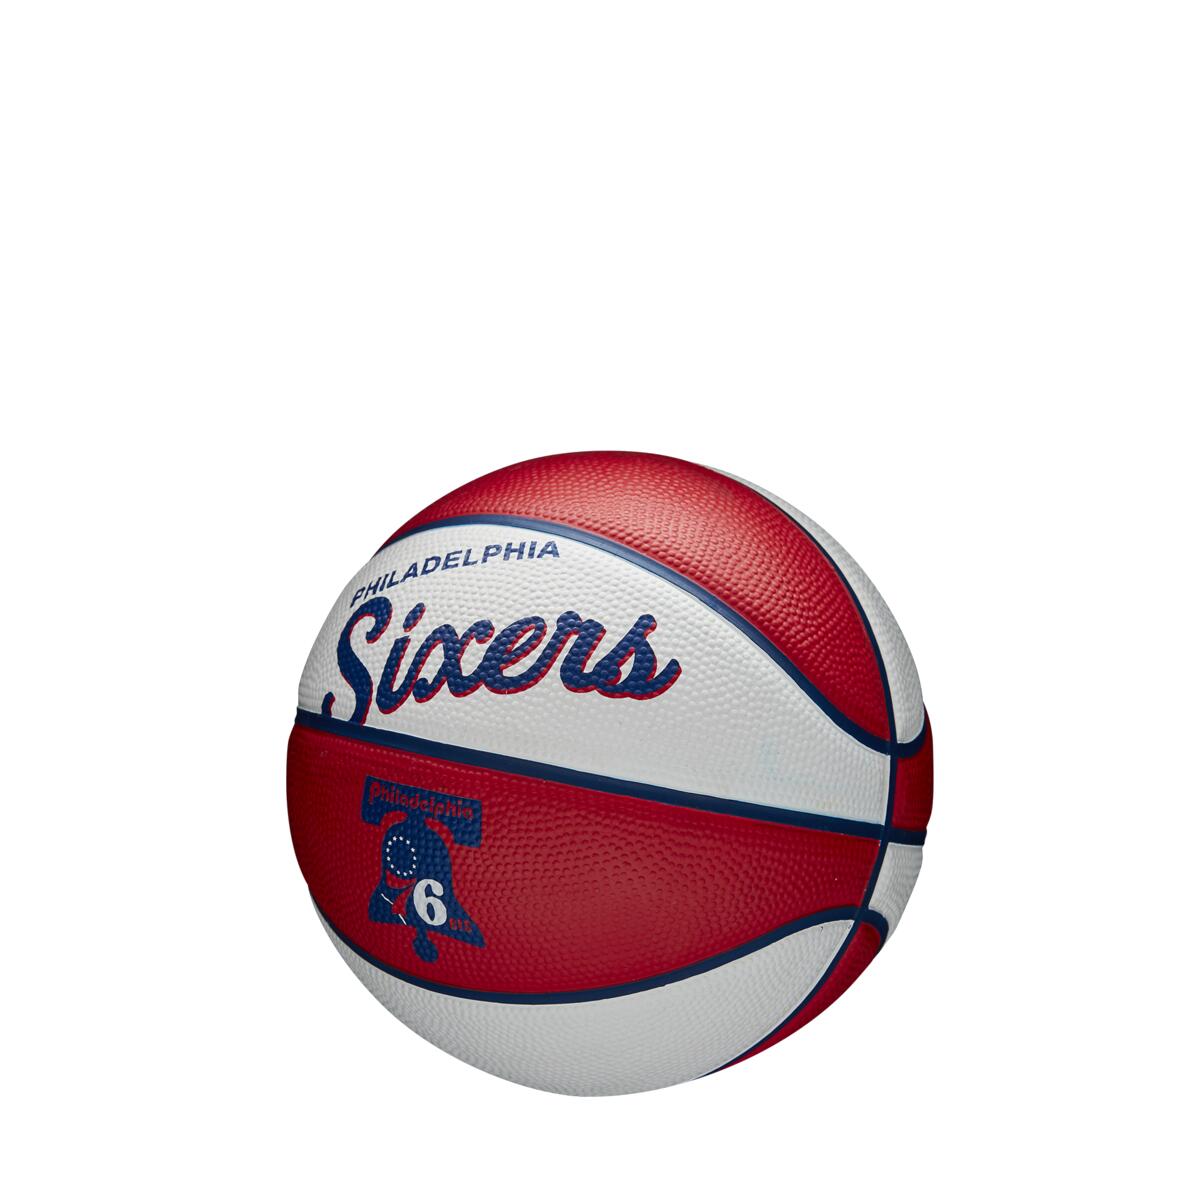 Ballons de basket NBA Retro Mini Philadelphia Sixers